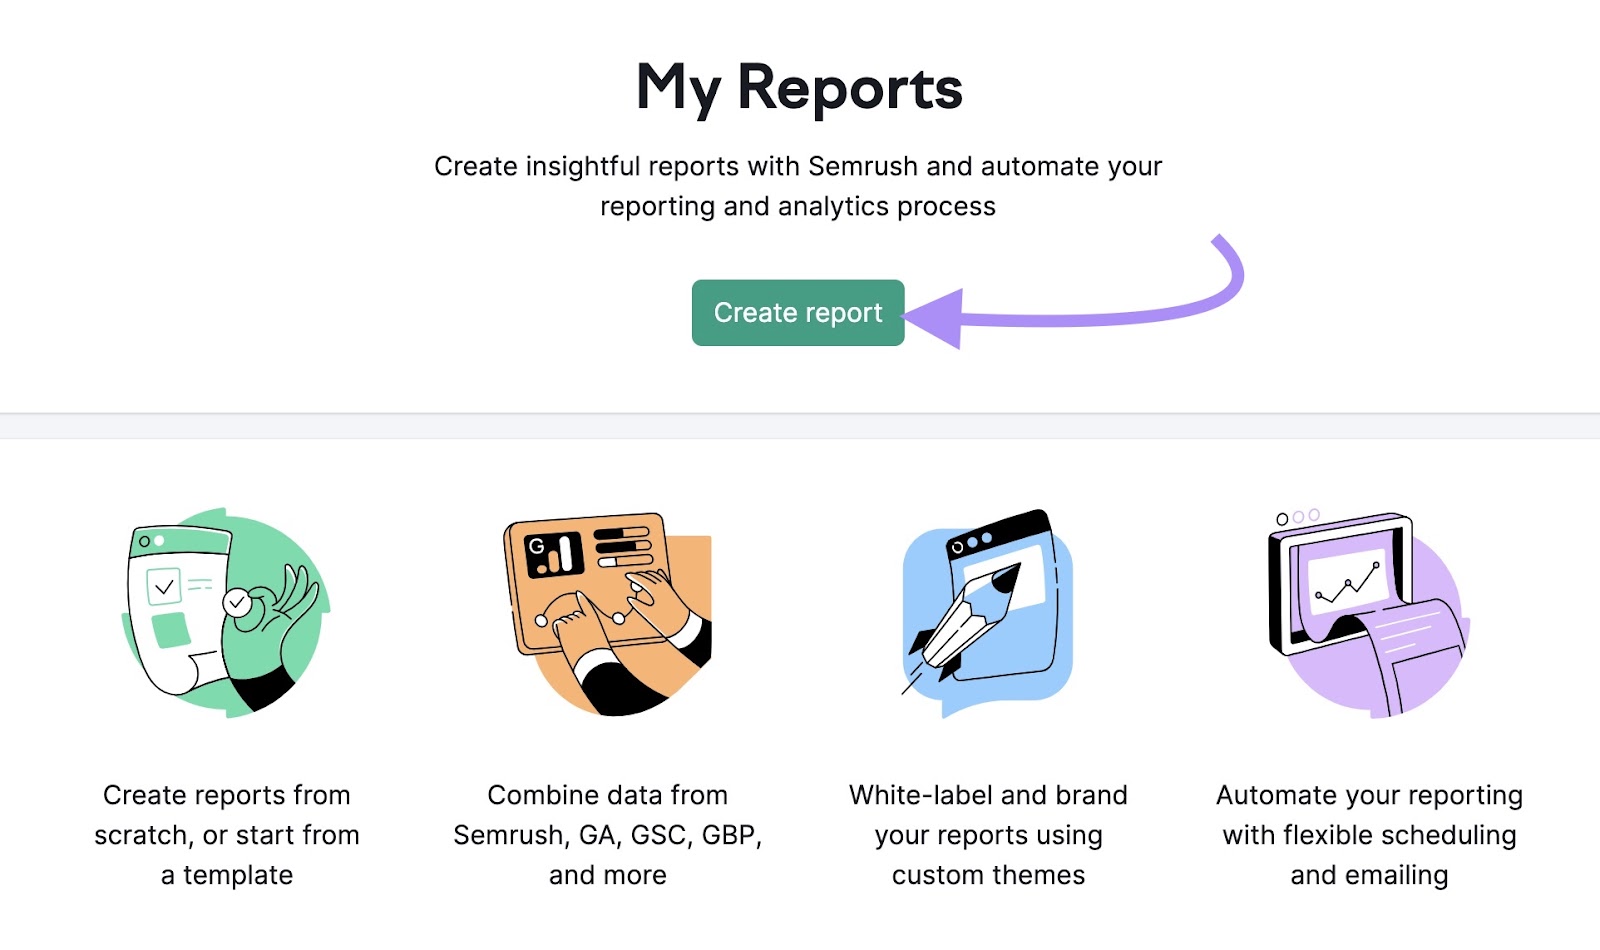 "Create report" fastener  successful  My Reports tool